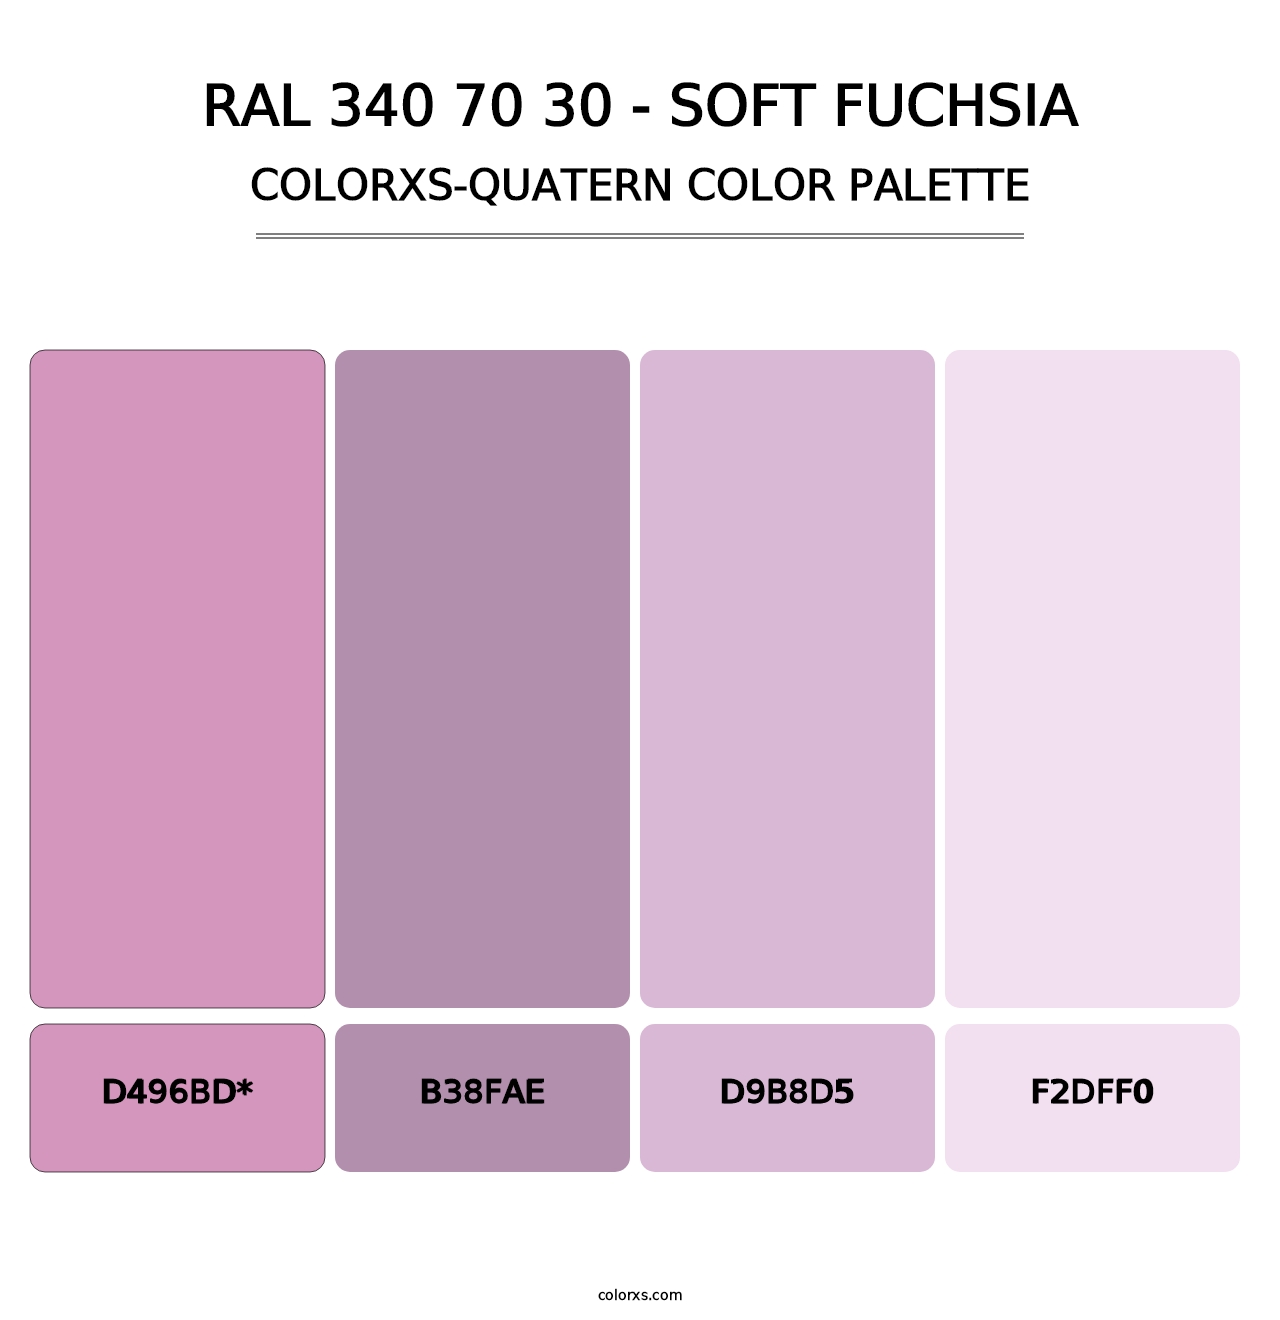 RAL 340 70 30 - Soft Fuchsia - Colorxs Quatern Palette